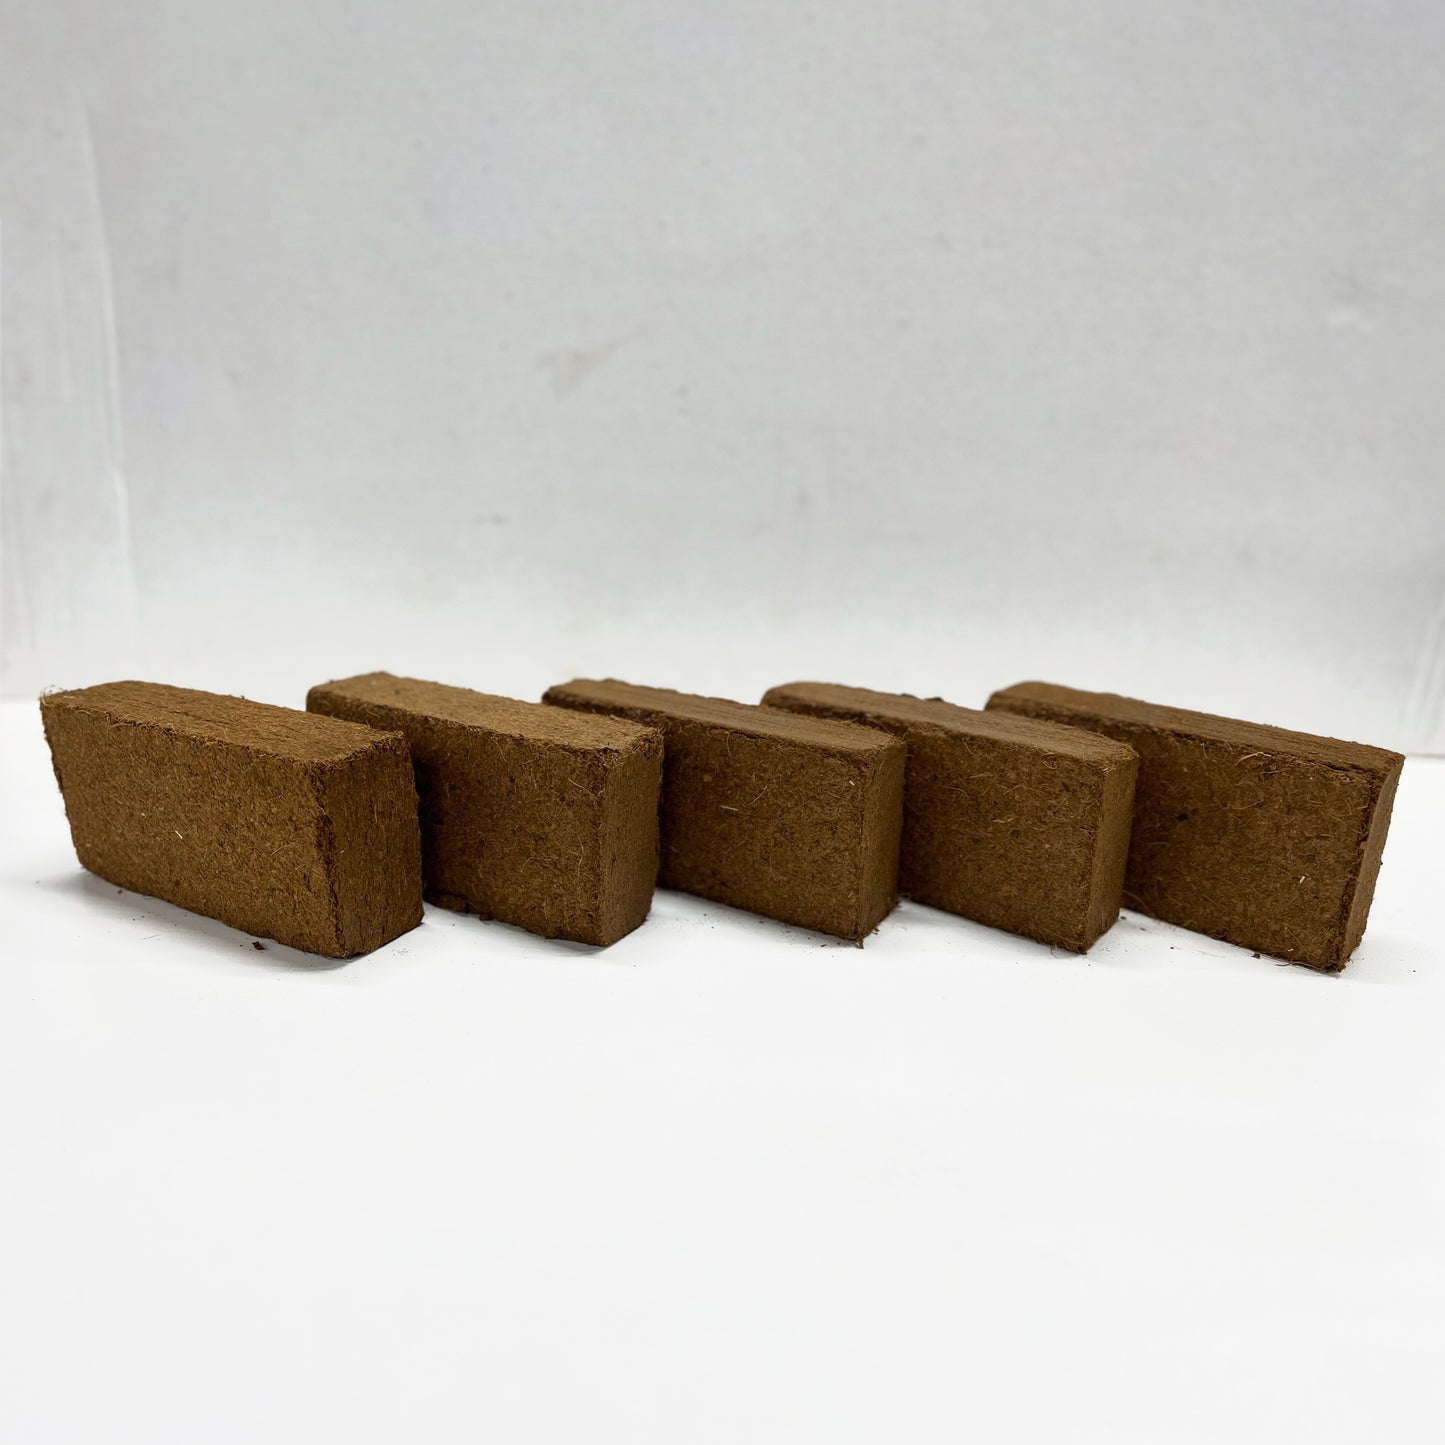 5 Bricks Pack, Best Coco Peat-Premium Coir Pith , 650g/1.4 Lbs, Lowest EC & Ph Value